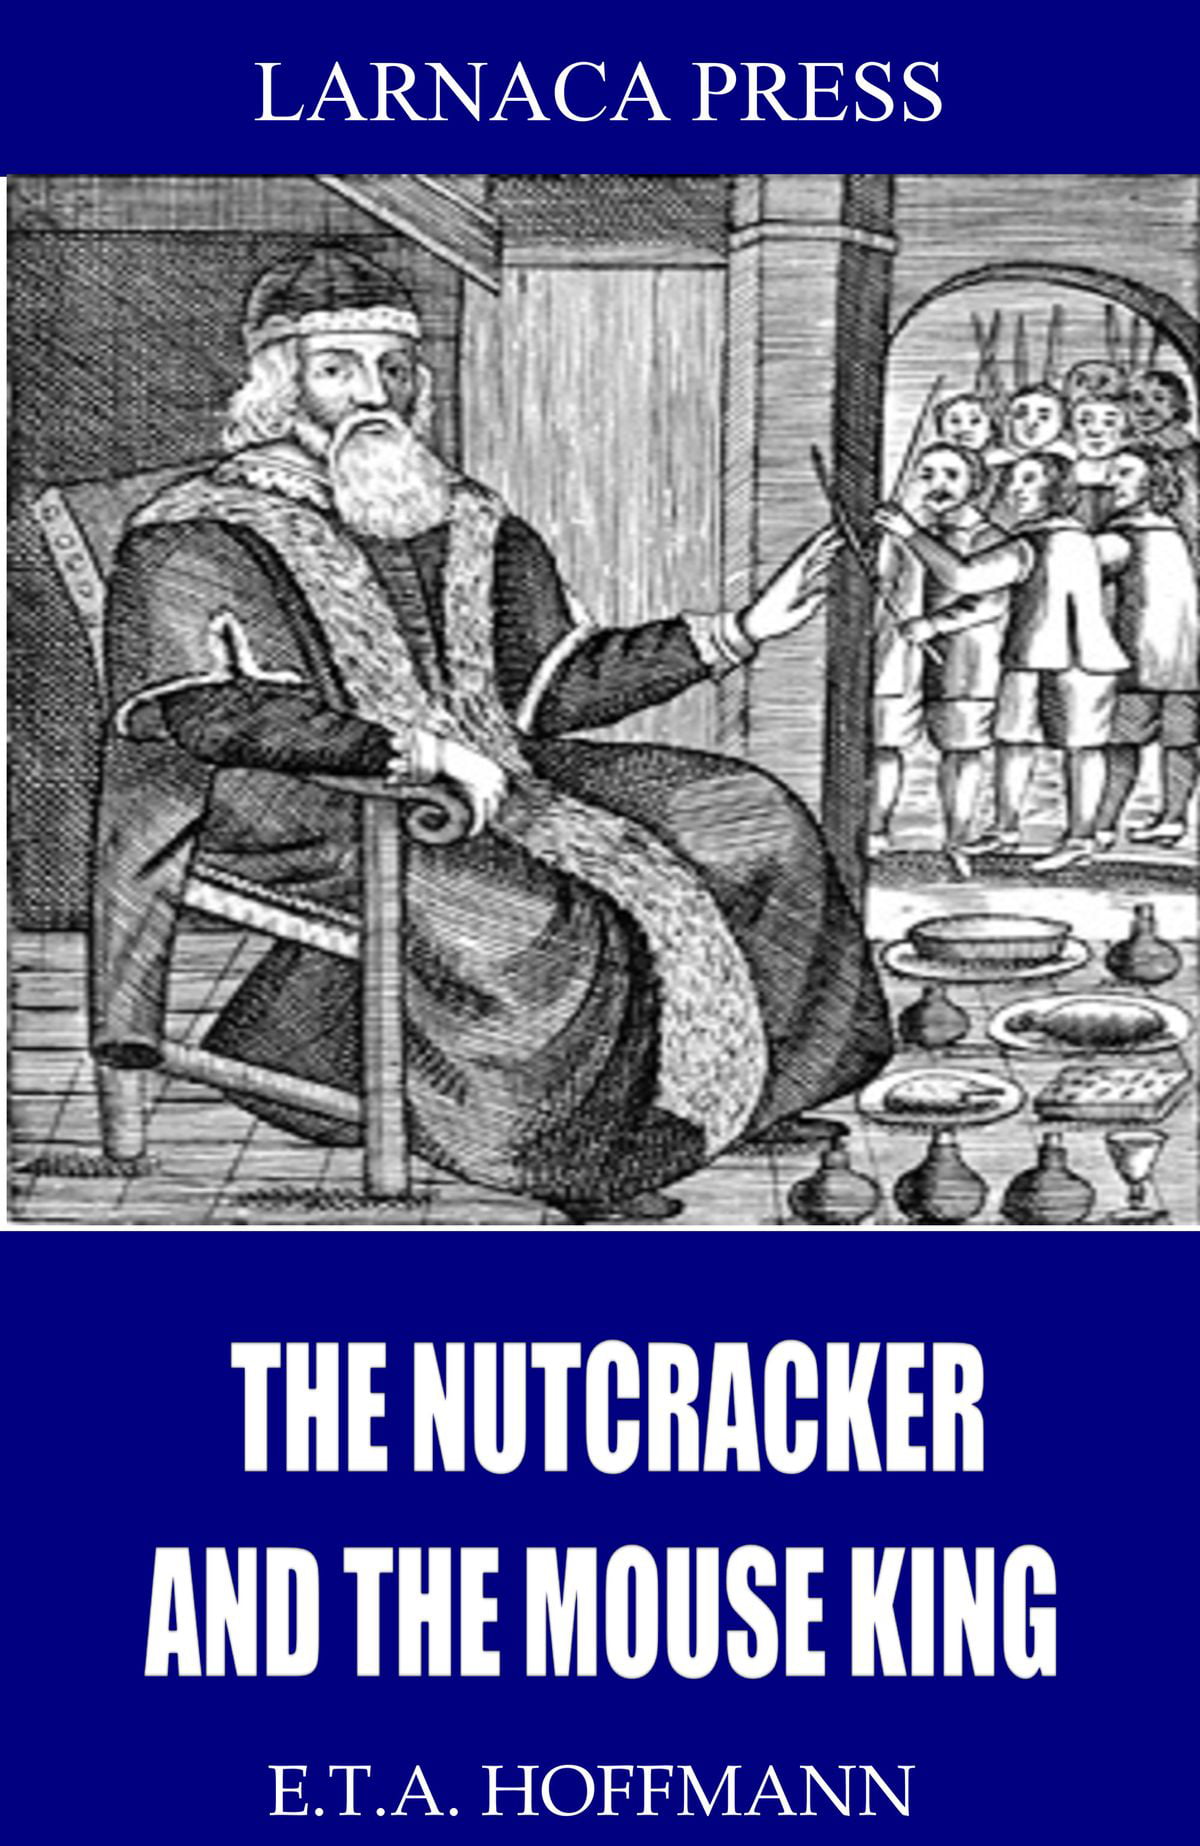 eta hoffmann nutcracker book